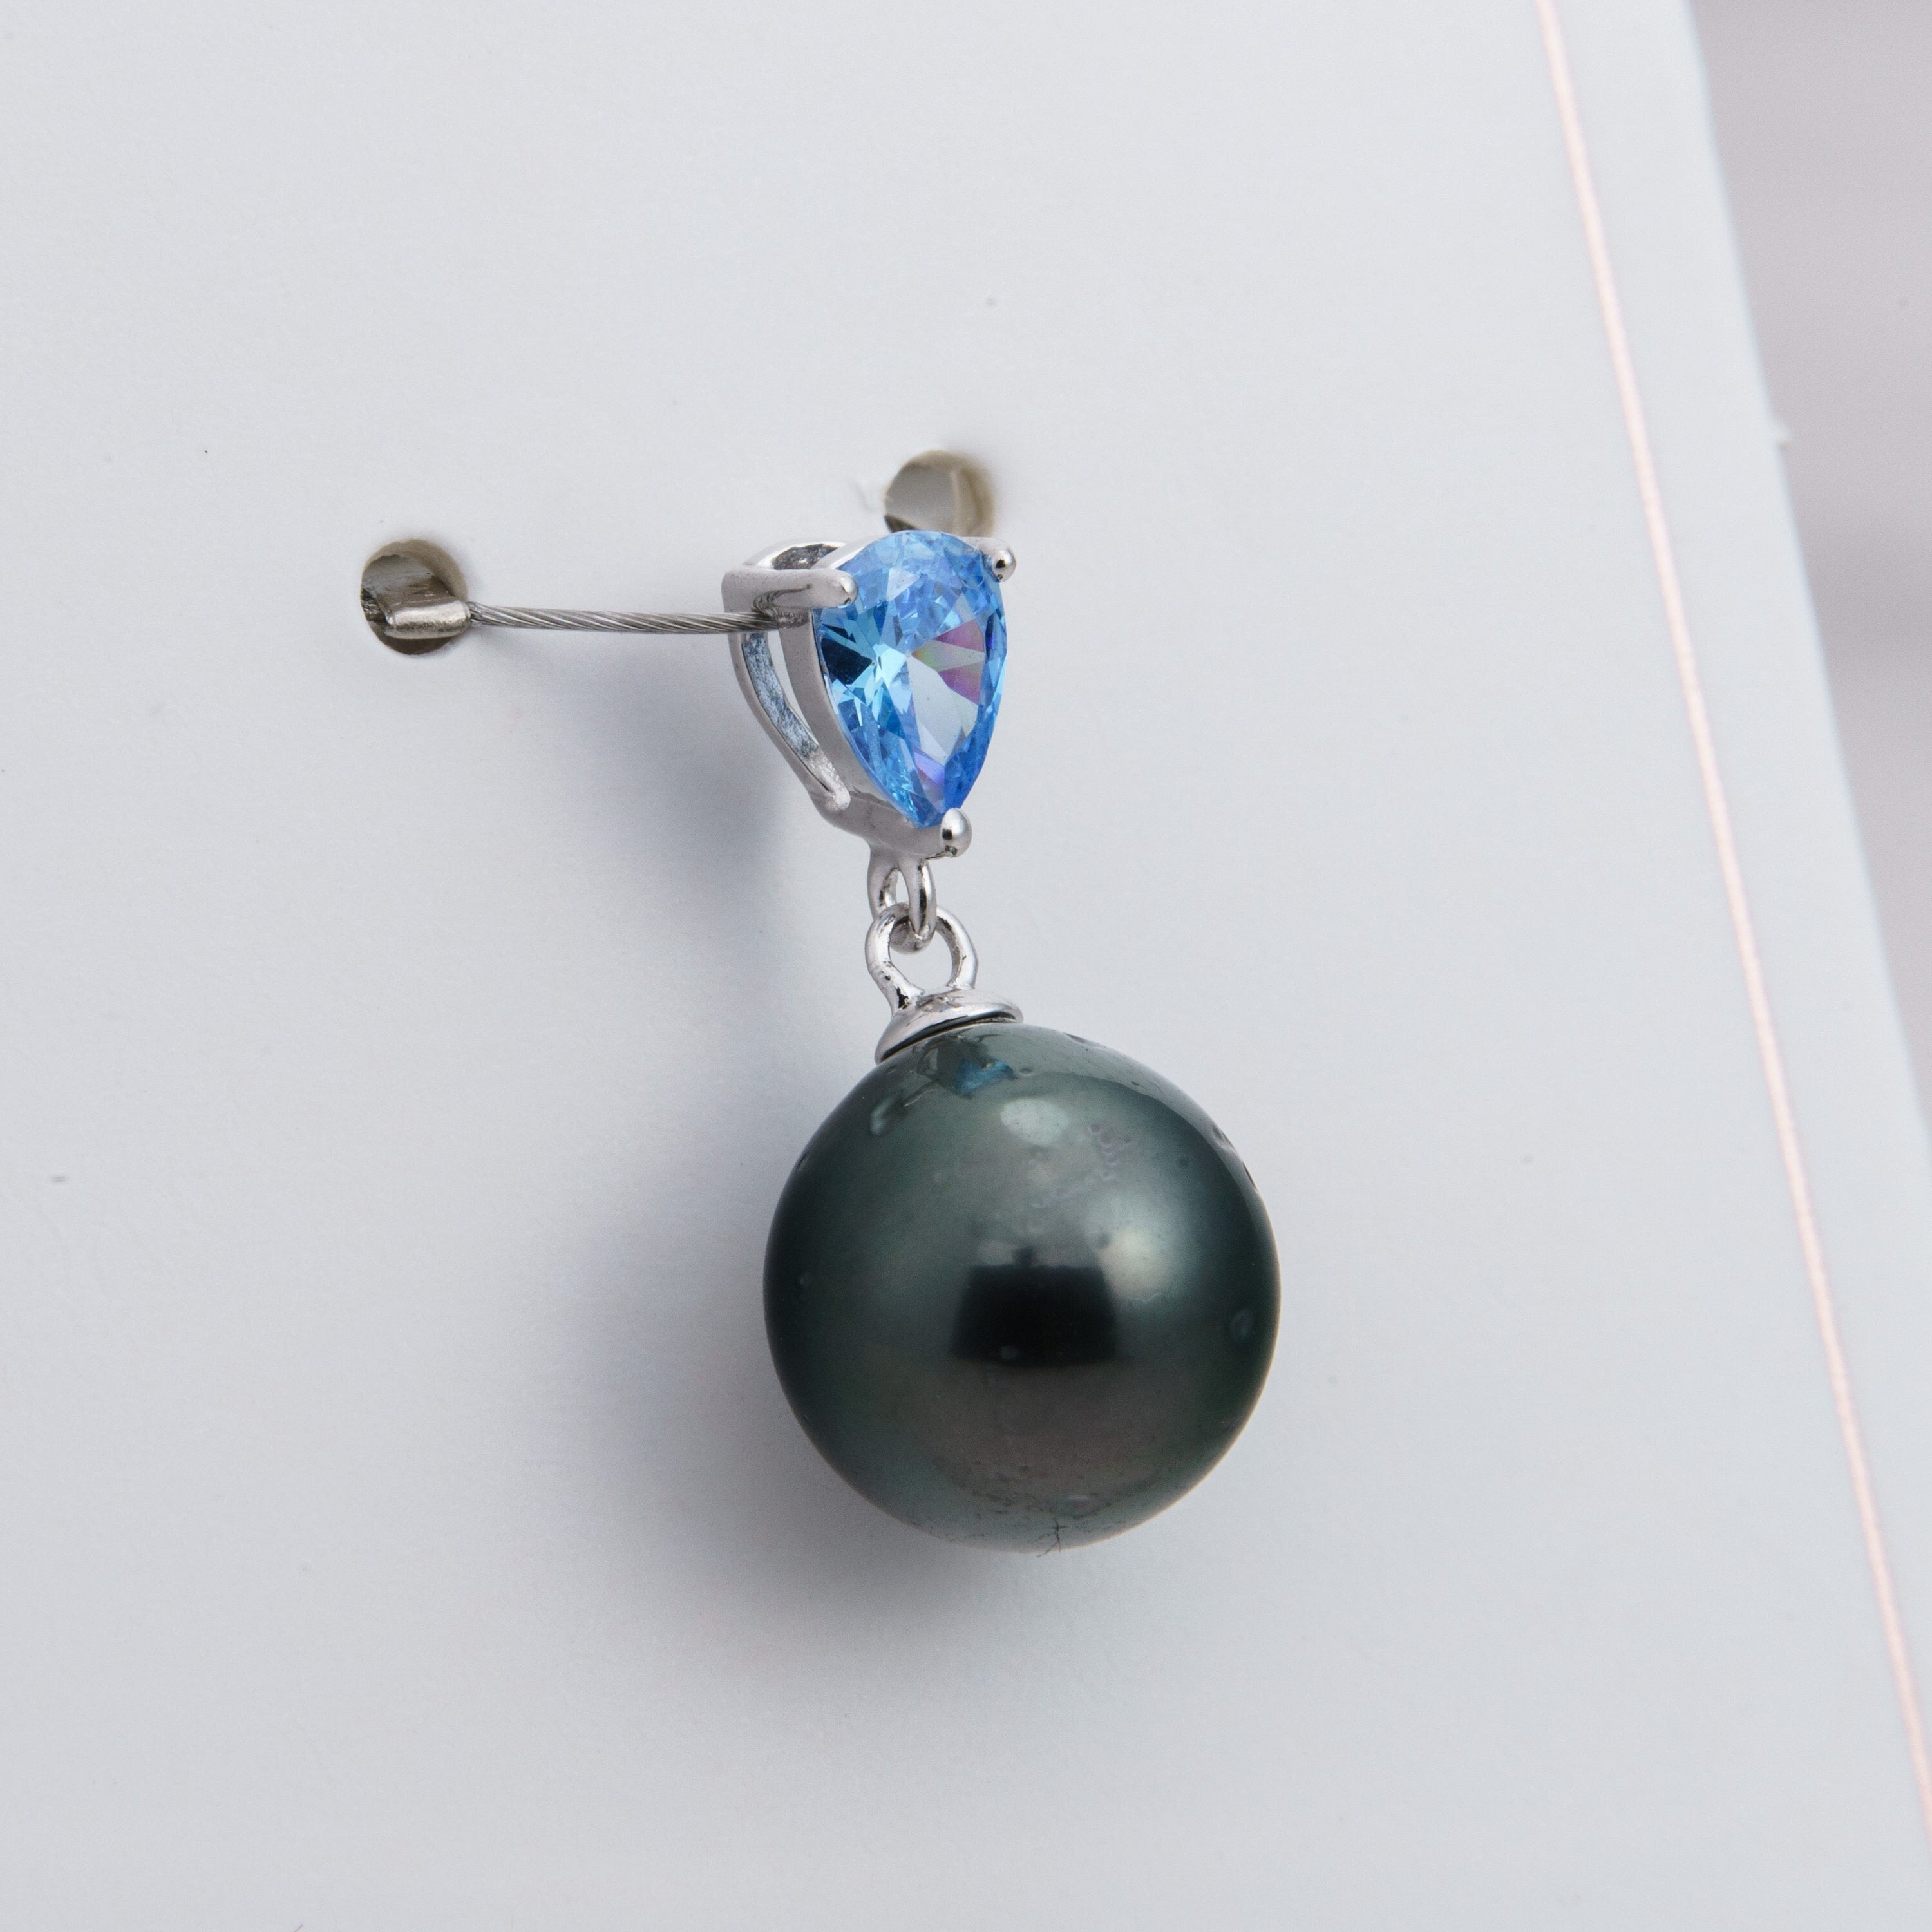 10mm tahitian pearl pendant, 925 sterling silver, rhodium finish, cubic zirconia